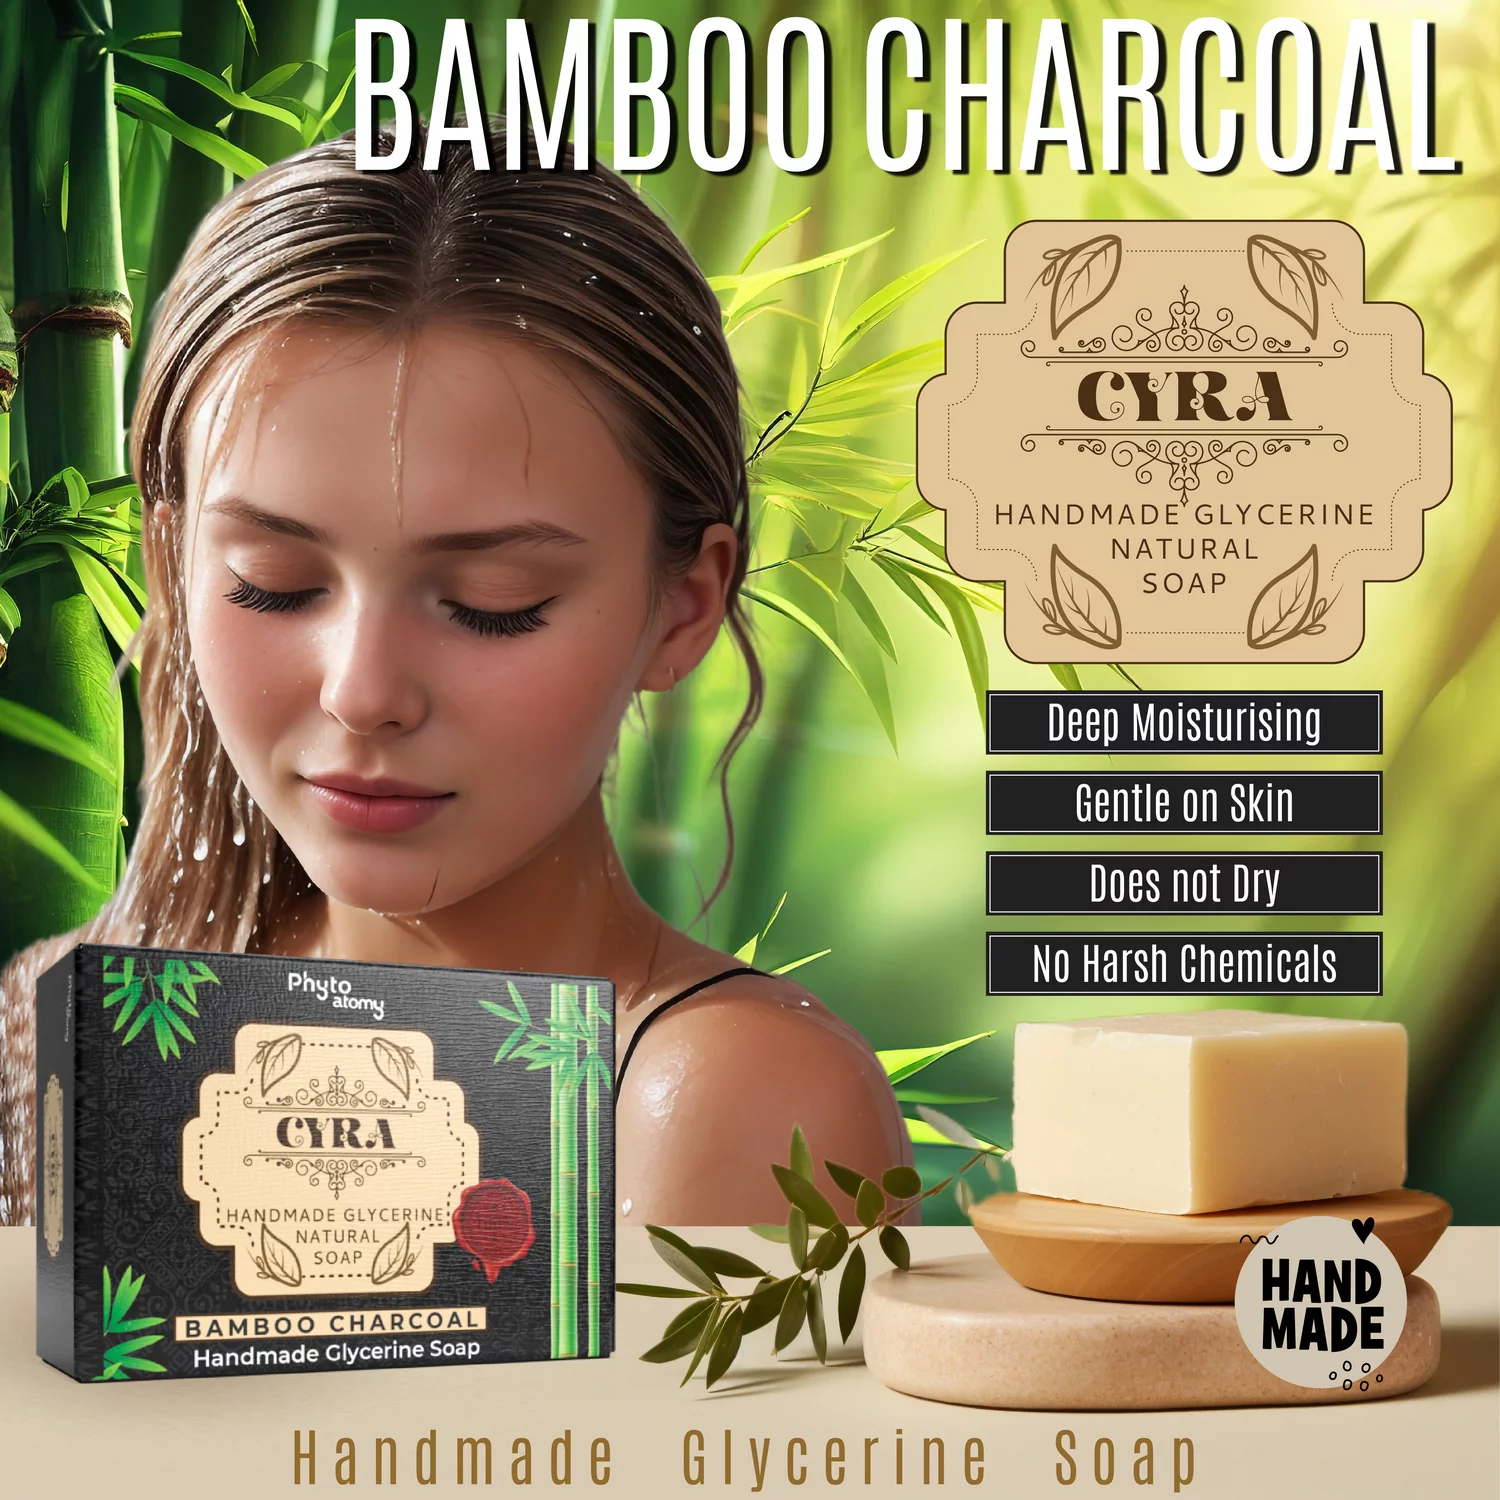 Charcoal Bamboo Glycerine Soap (100g)